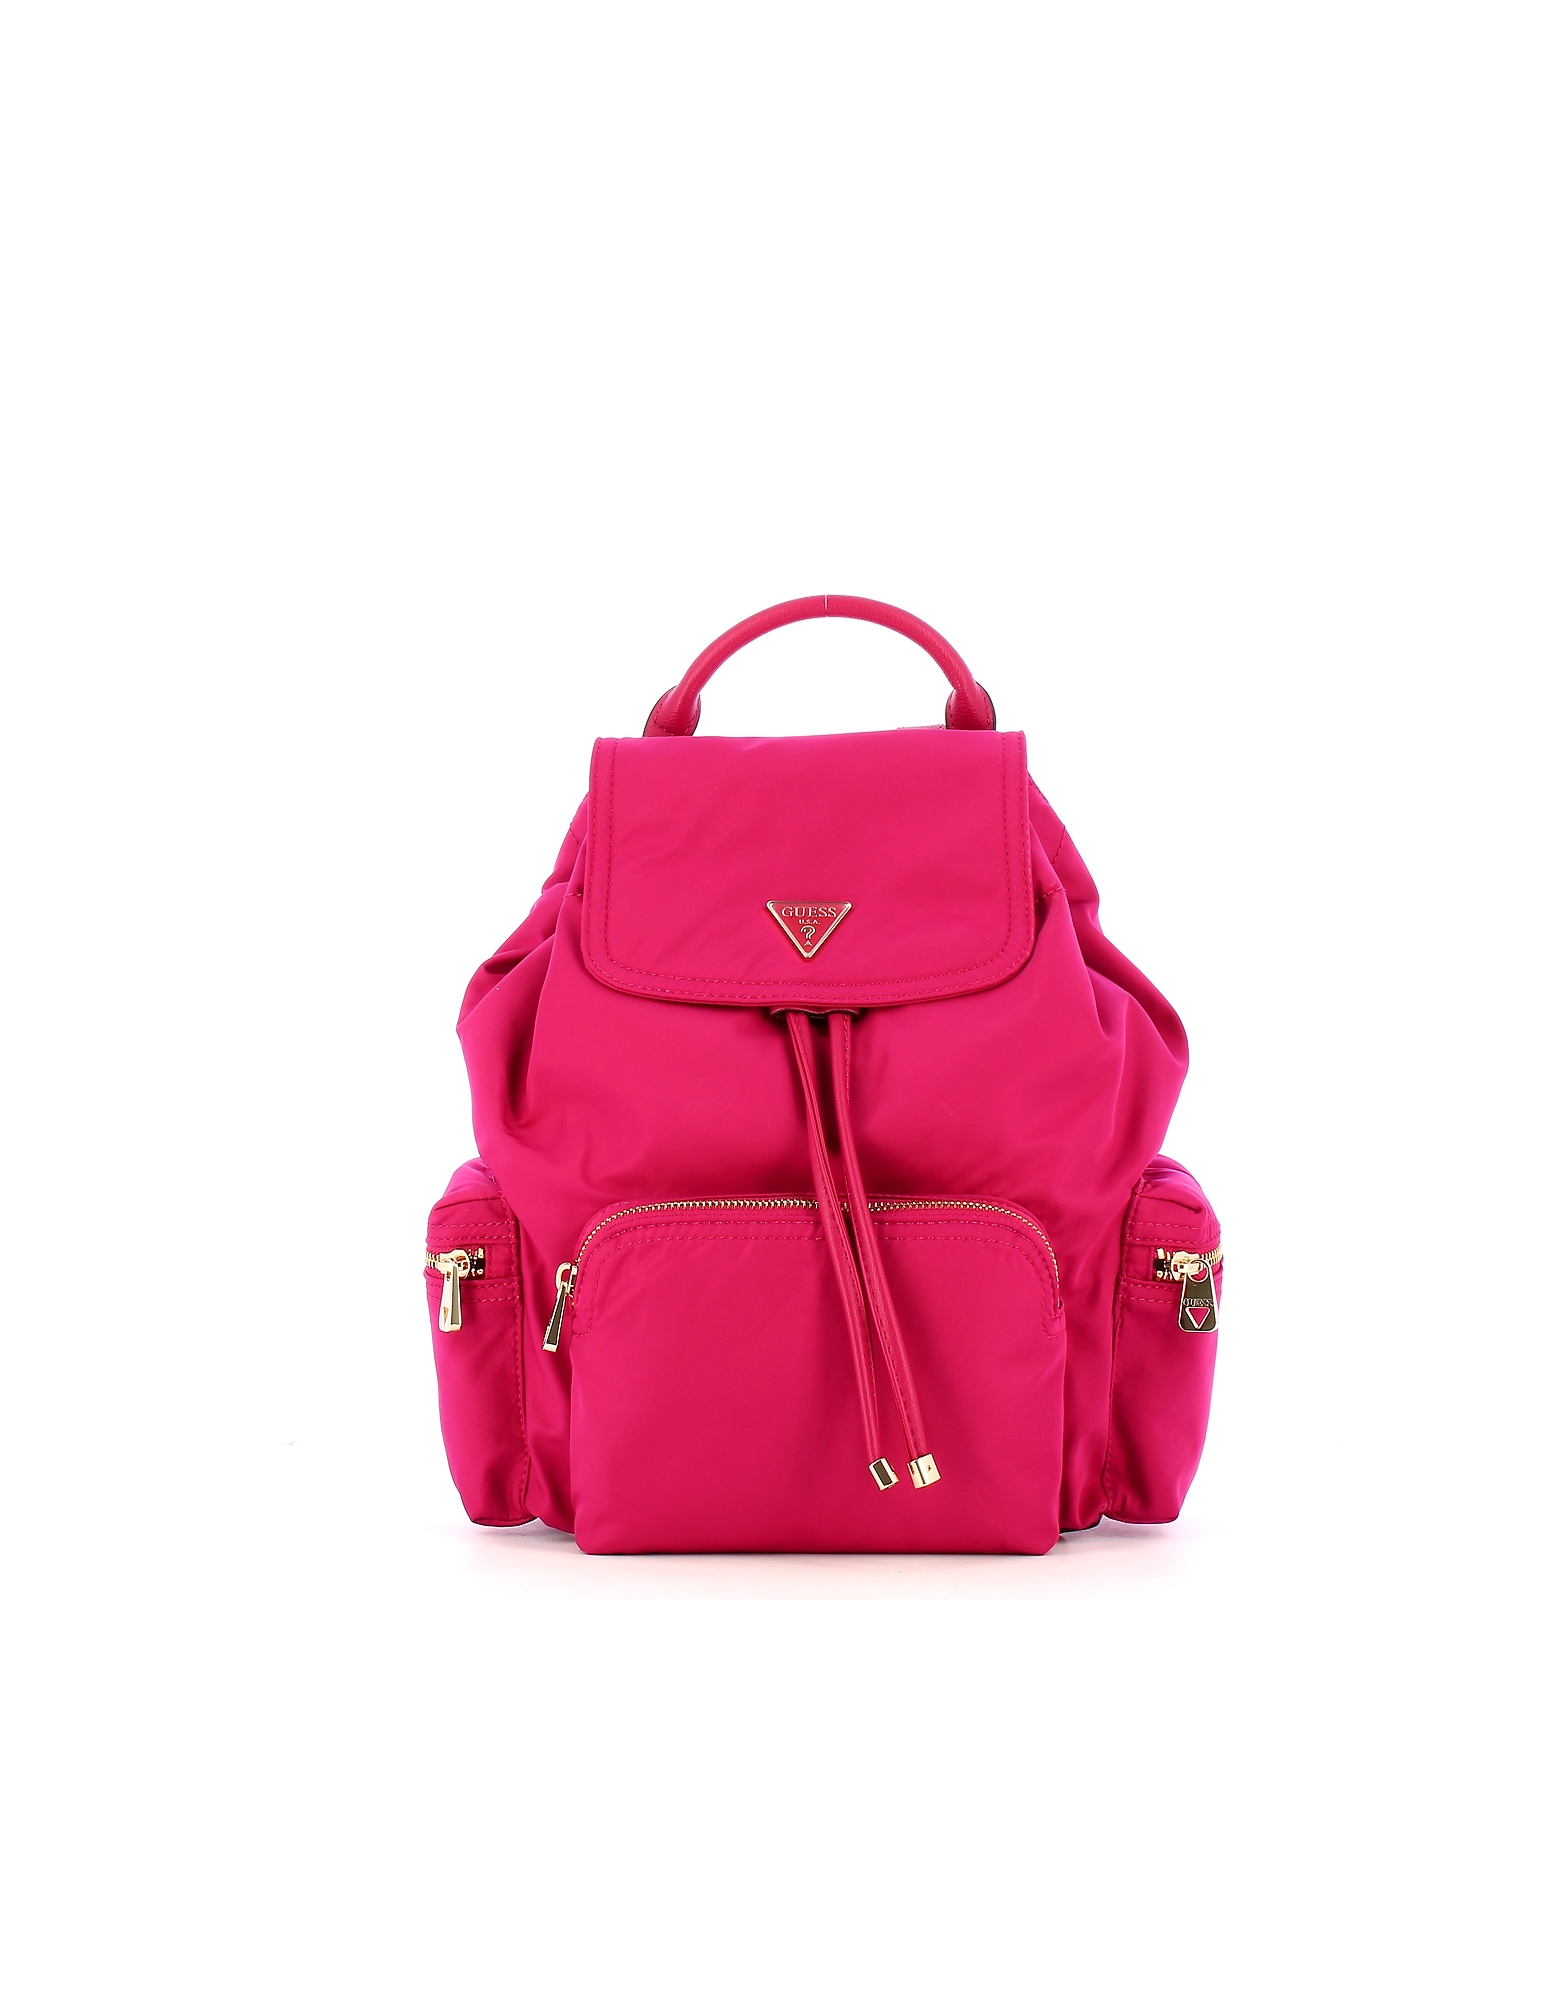 Guess Designer Handbags Women's Backpack In Pattern